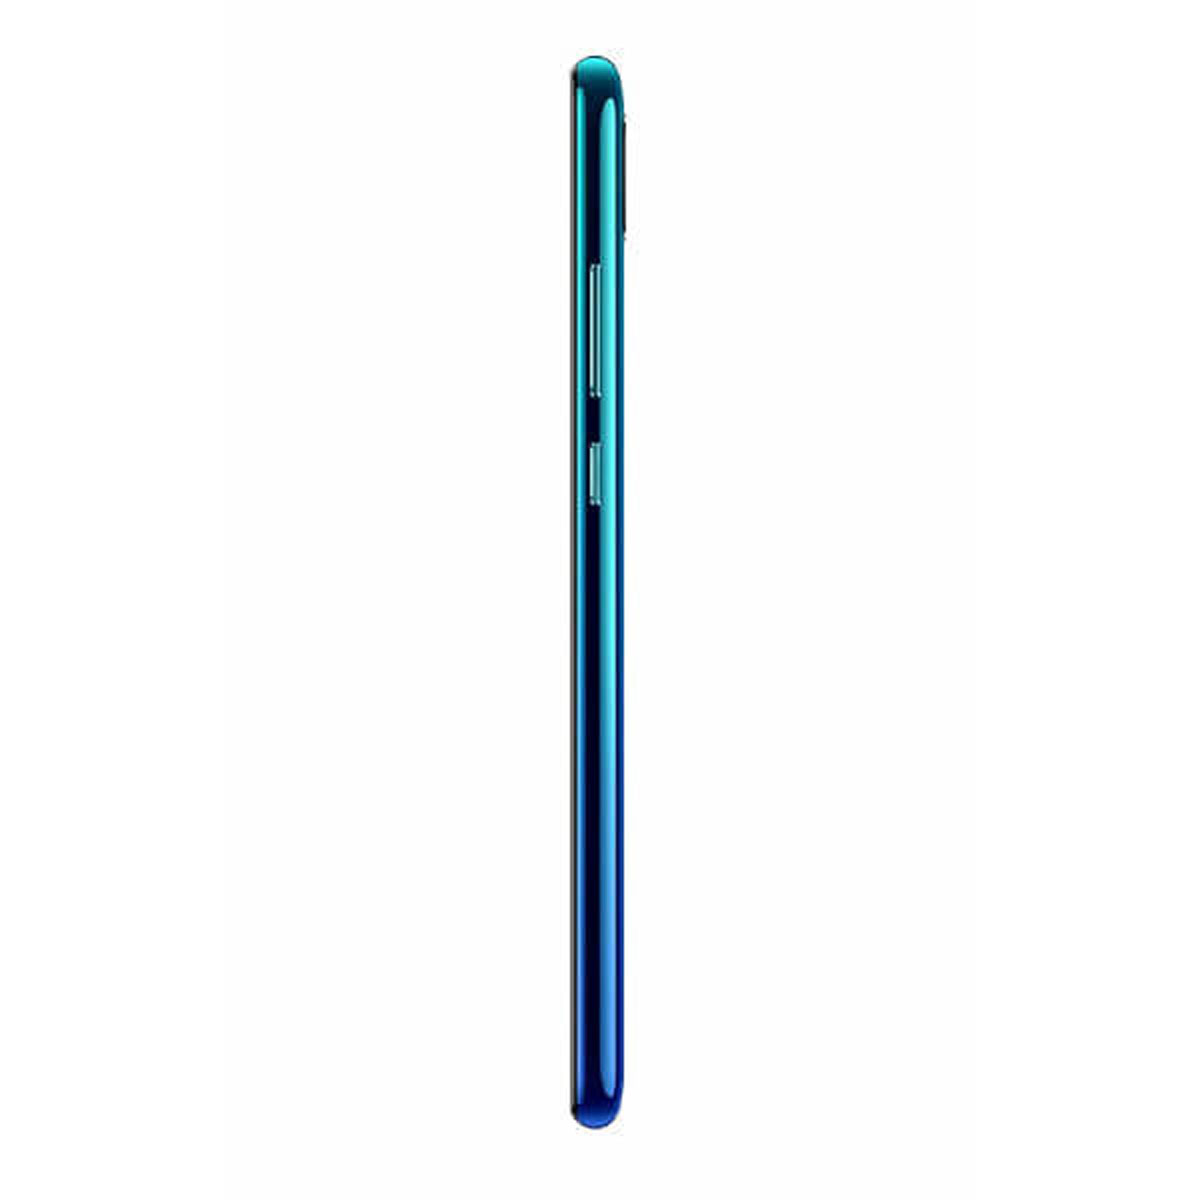 HUAWEI P Smart (2019) 64 GB Blau